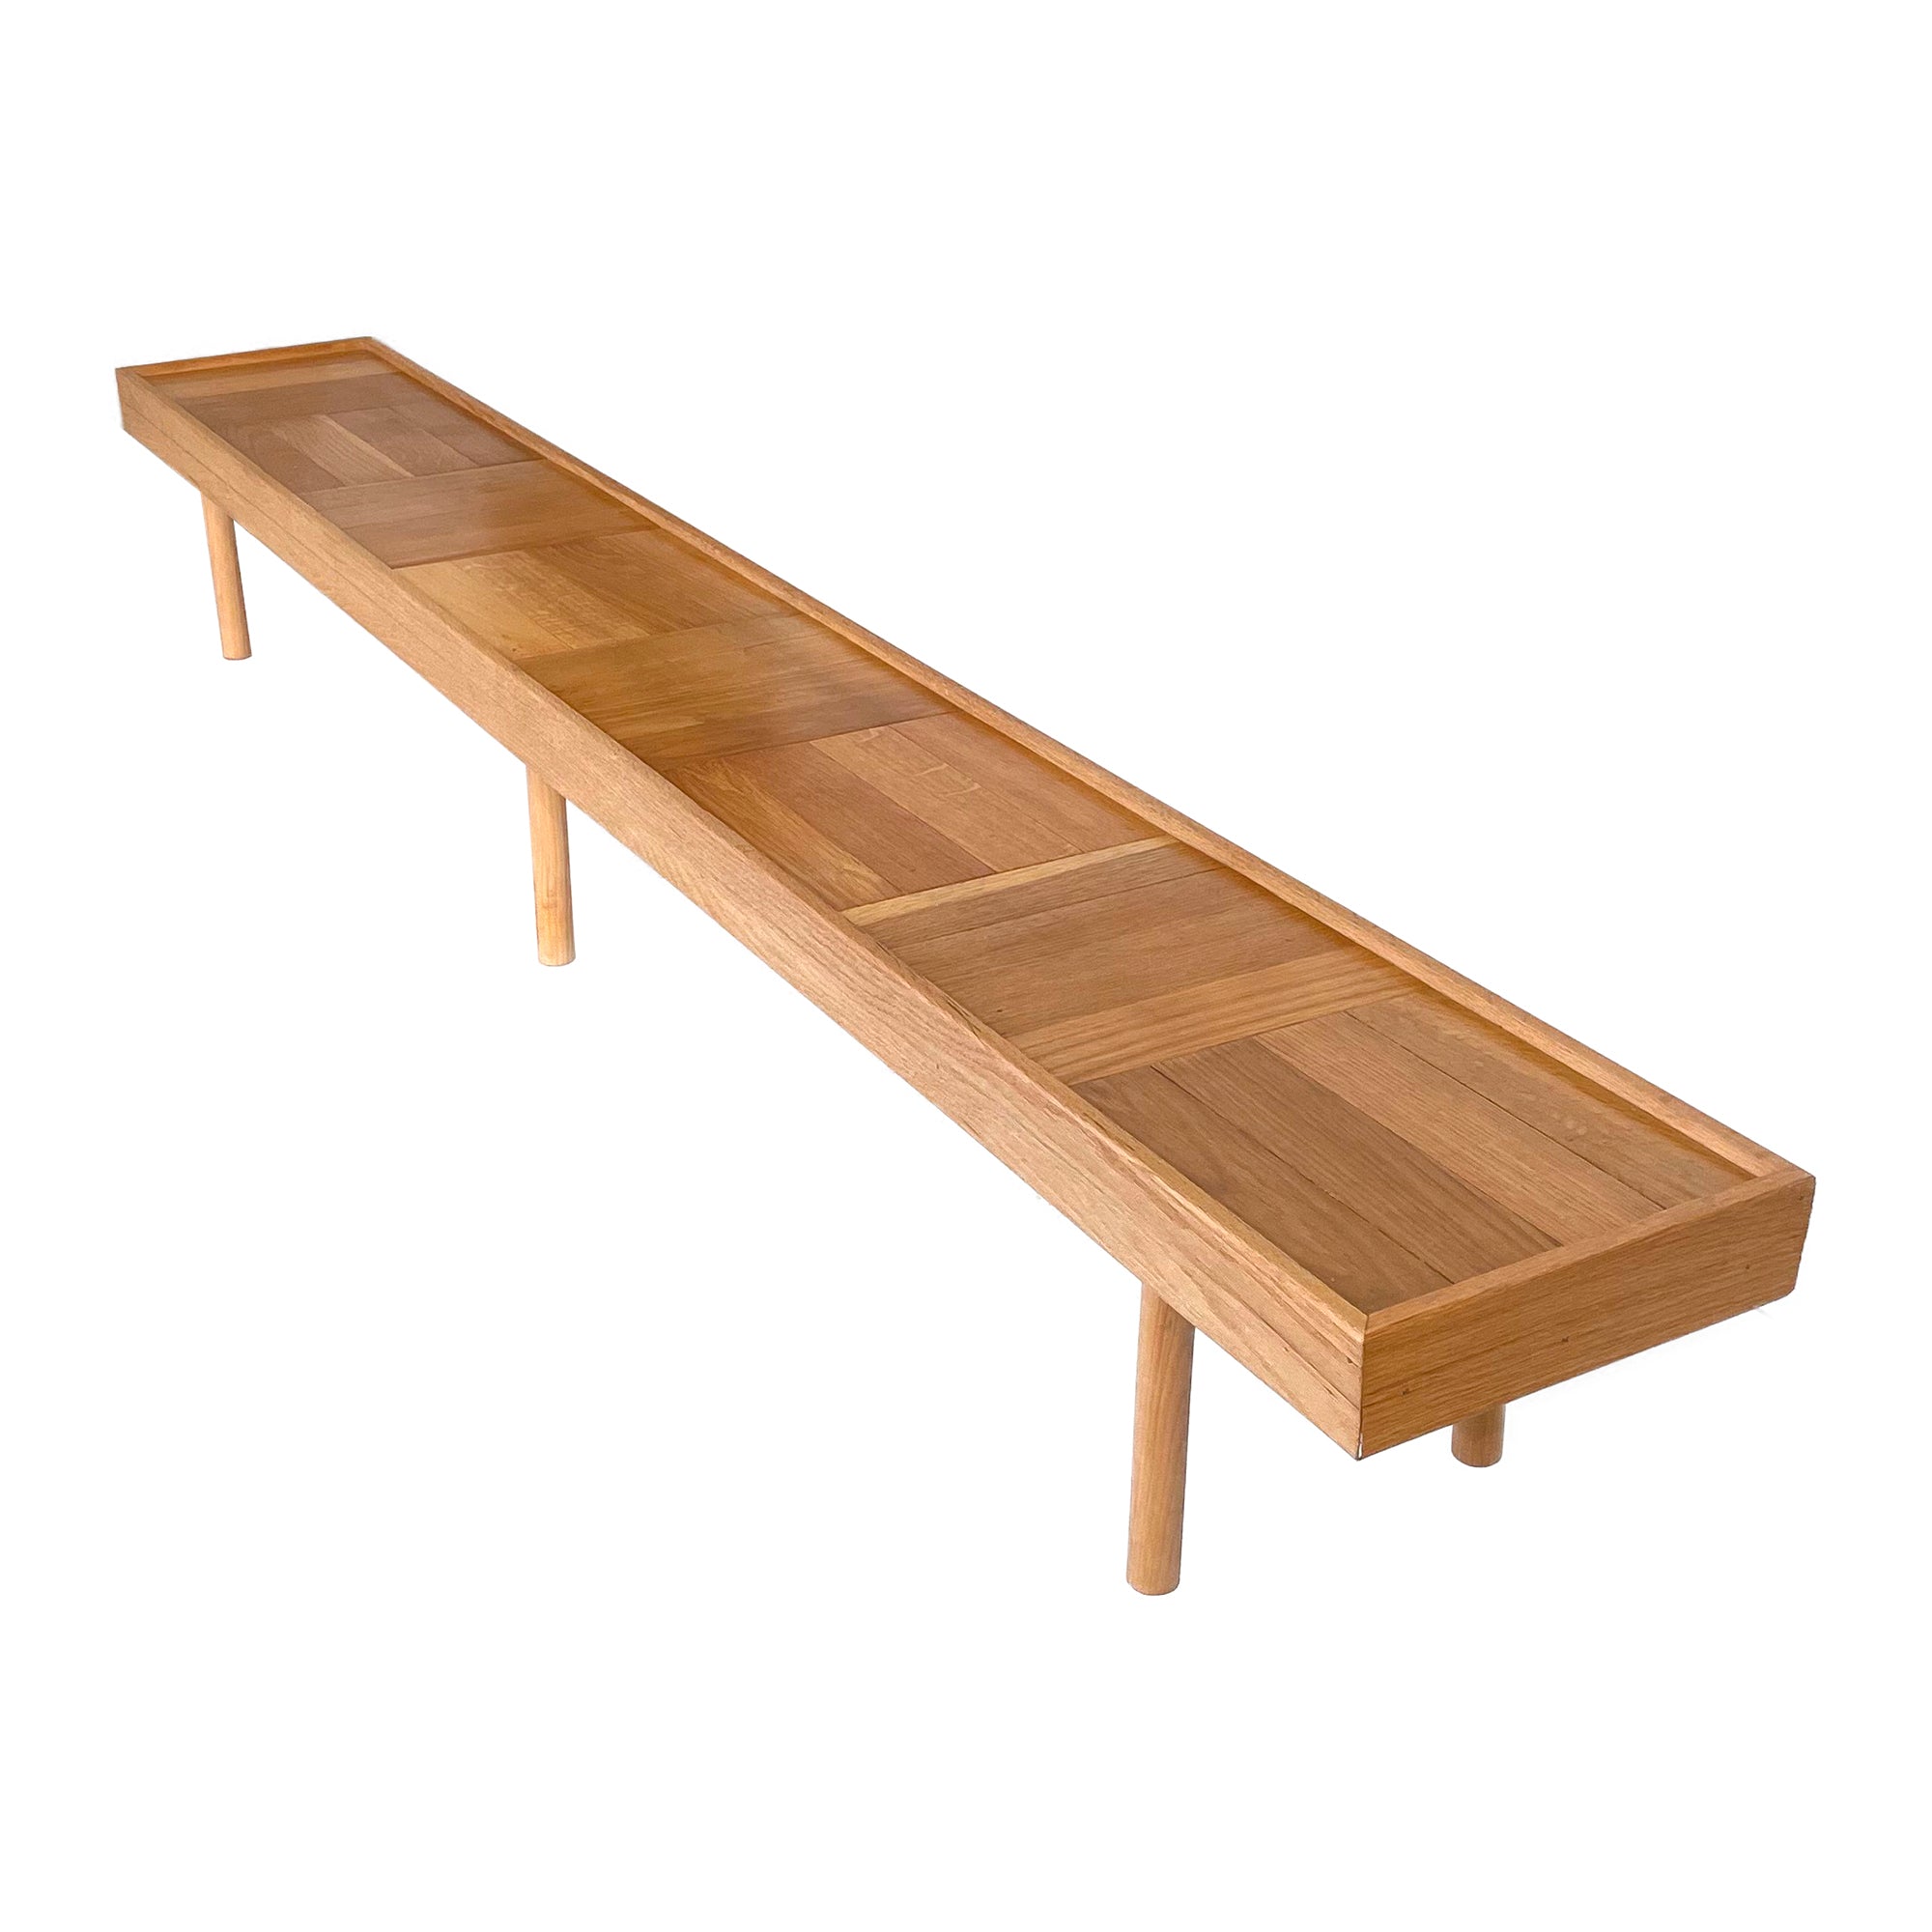 Unusual Low Long Wood Tile Table